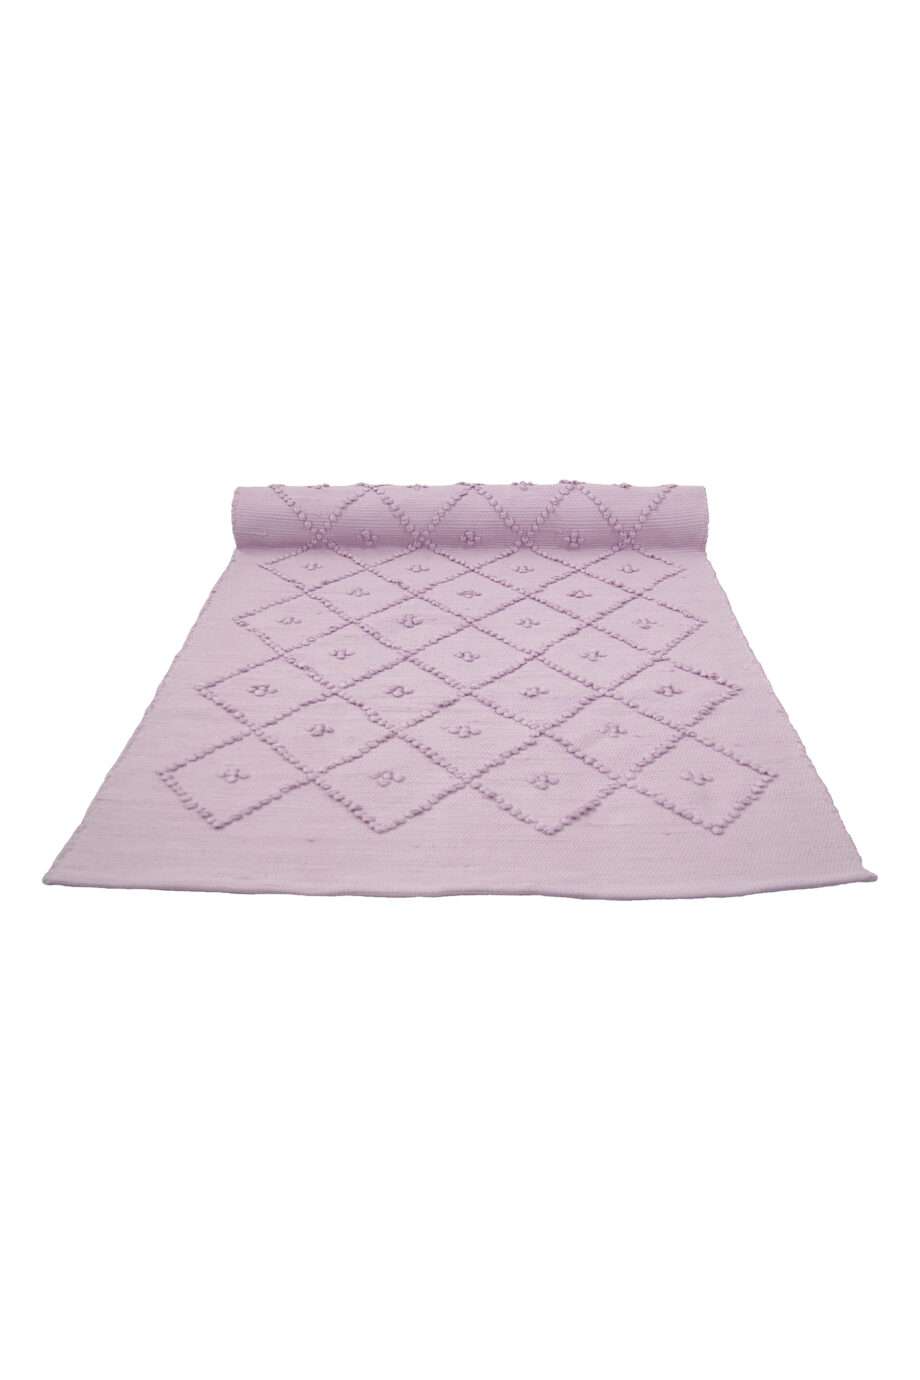 diamond lavender woven cotton rug medium